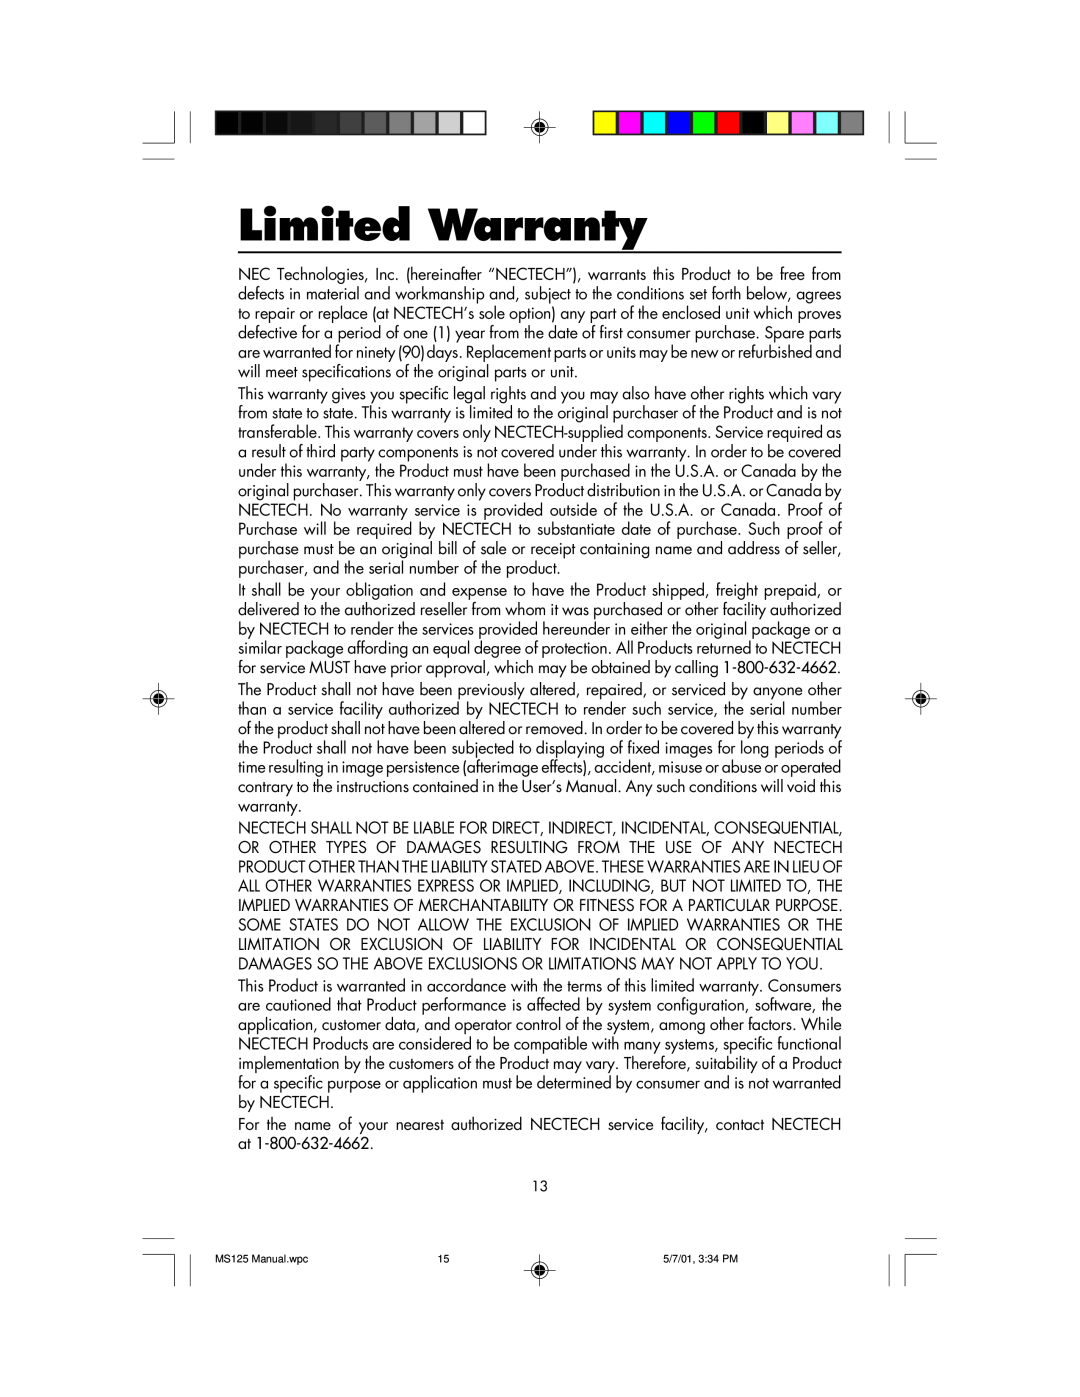 NEC MS125 manual Limited Warranty 